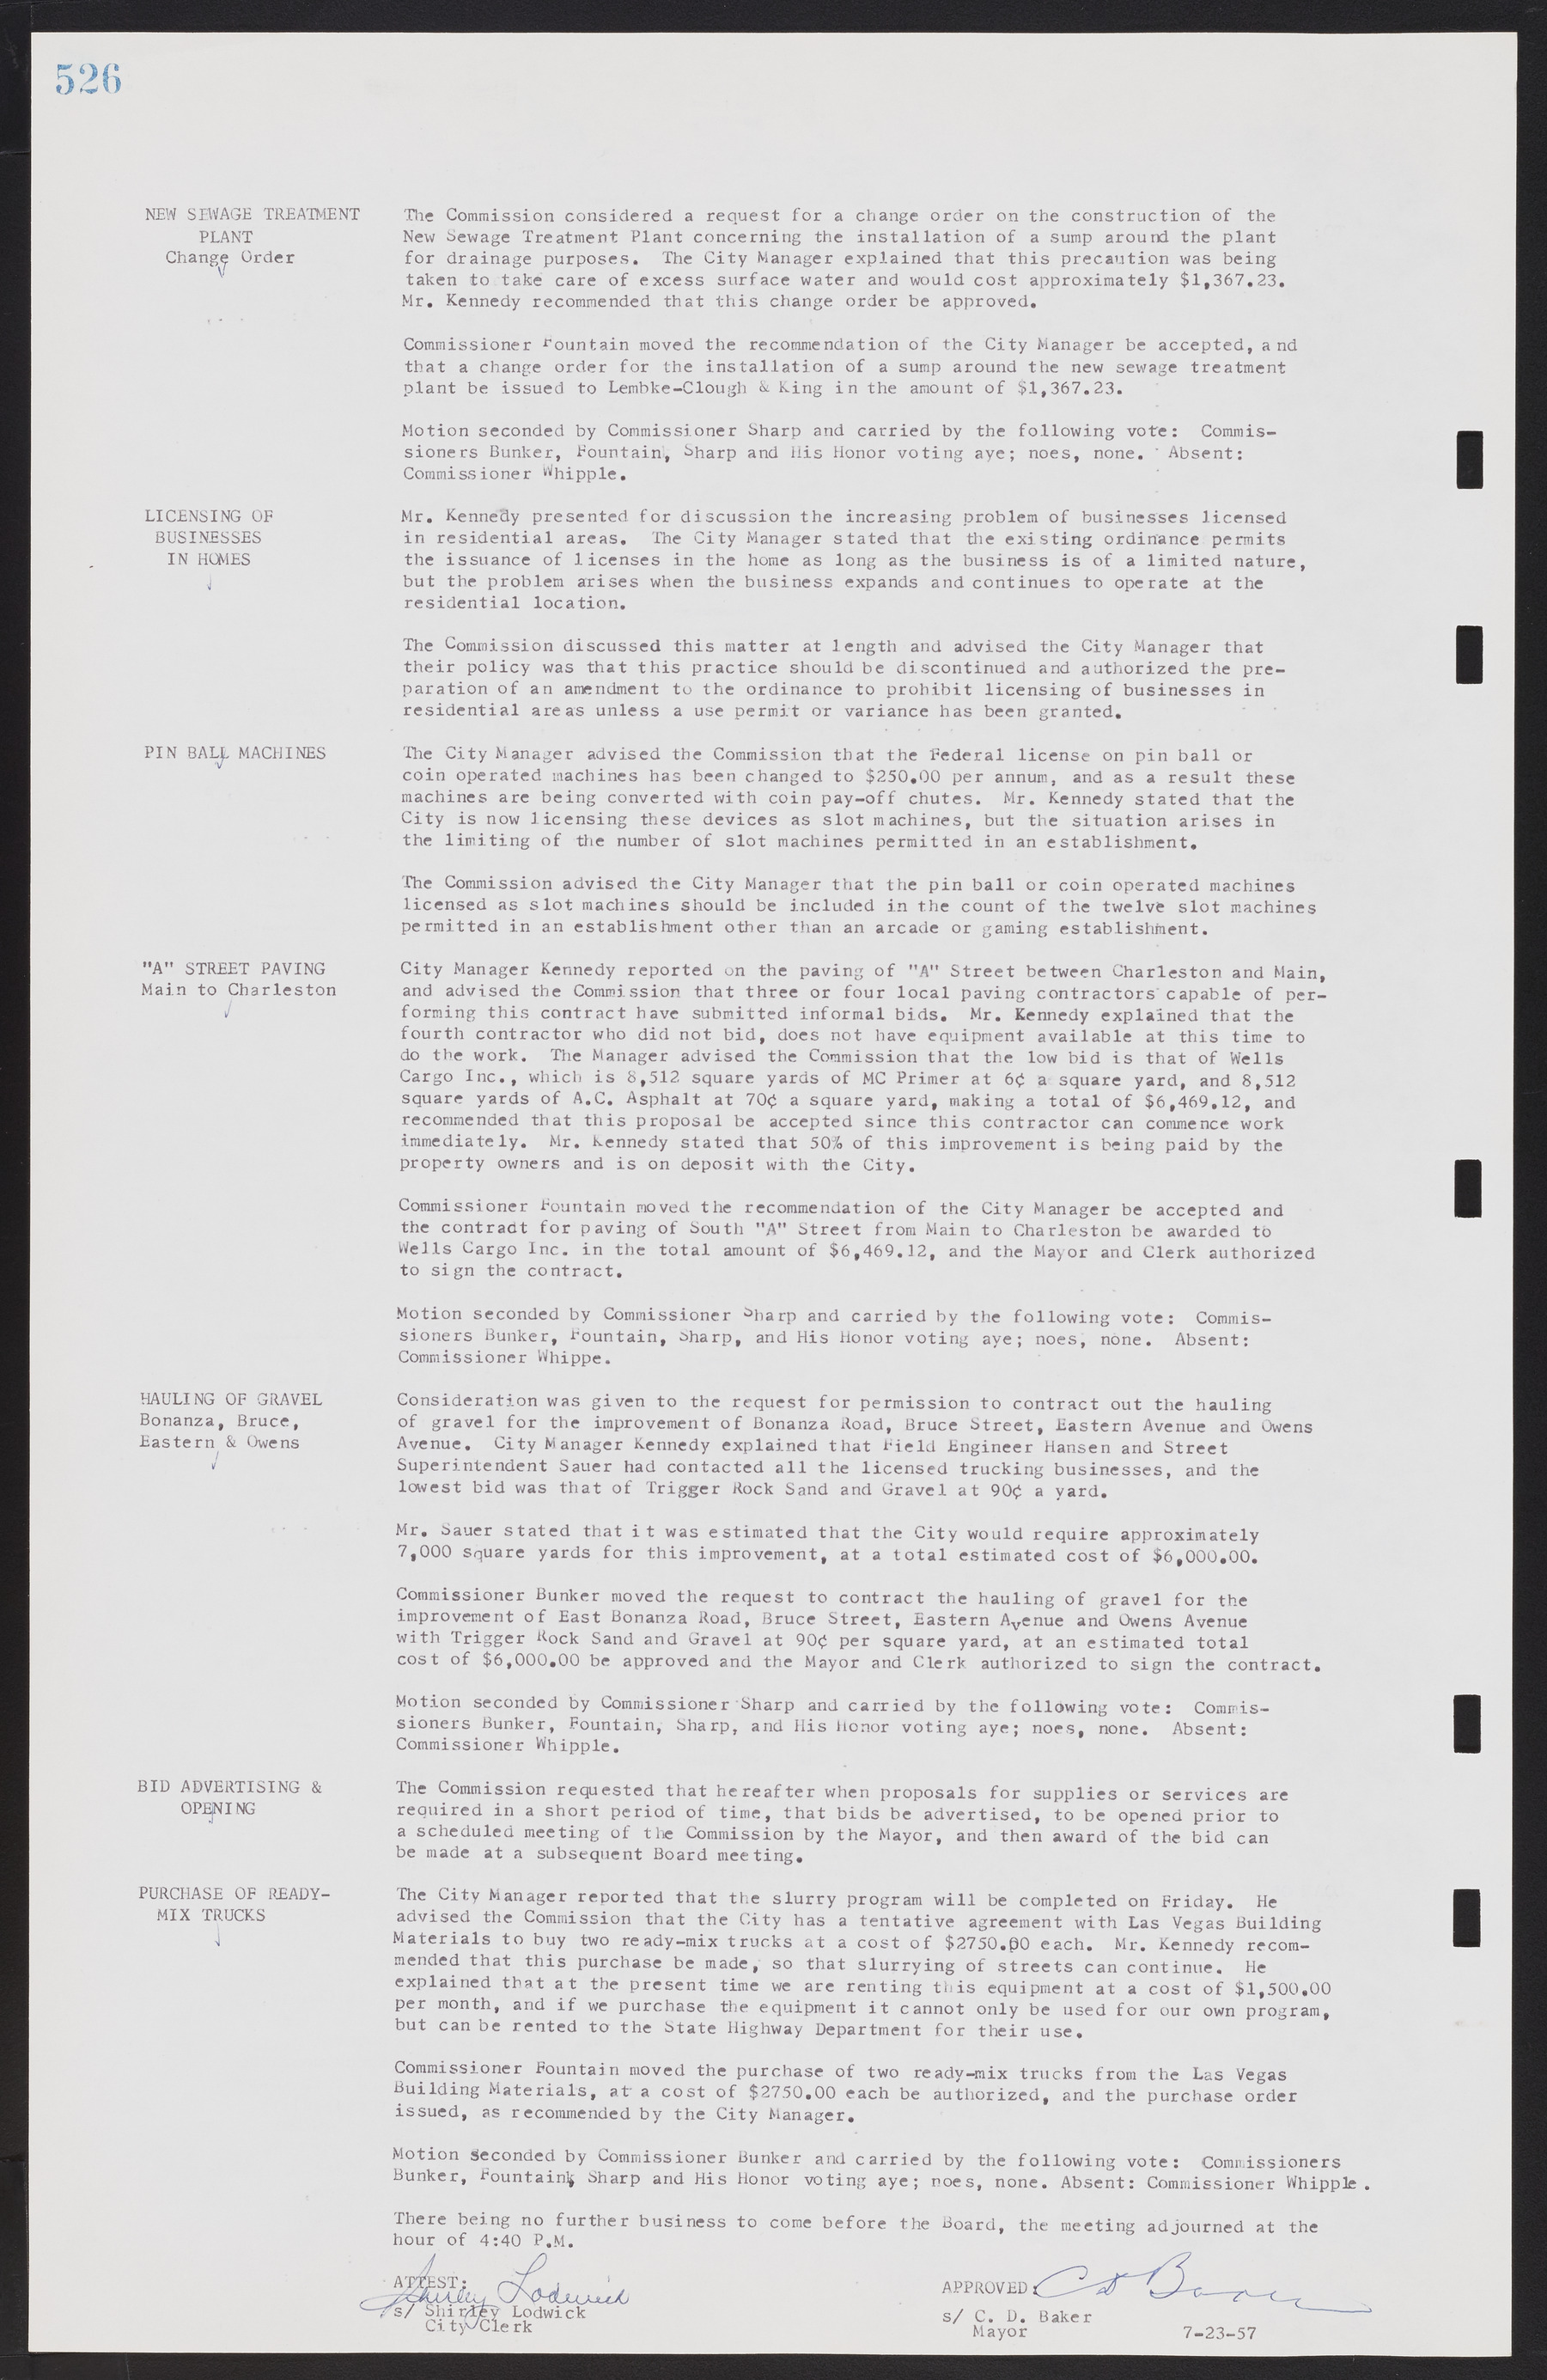 Las Vegas City Commission Minutes, September 21, 1955 to November 20, 1957, lvc000010-546